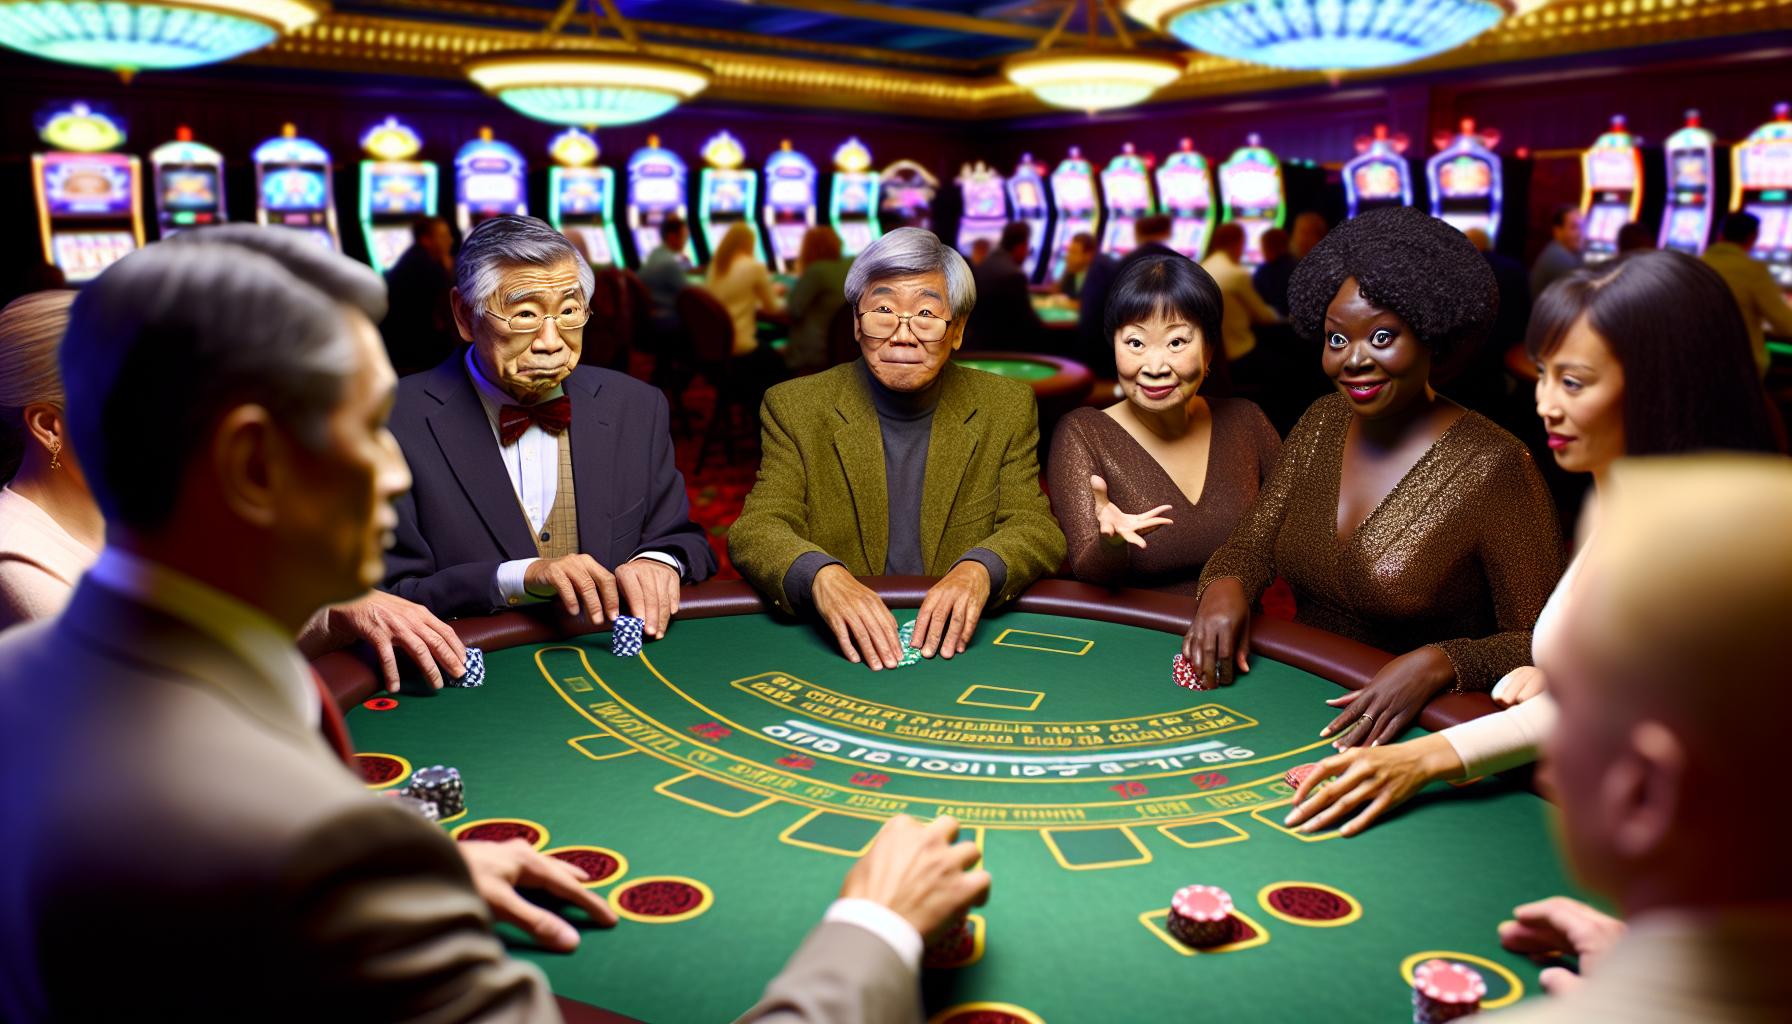 Blackjack table in a casino